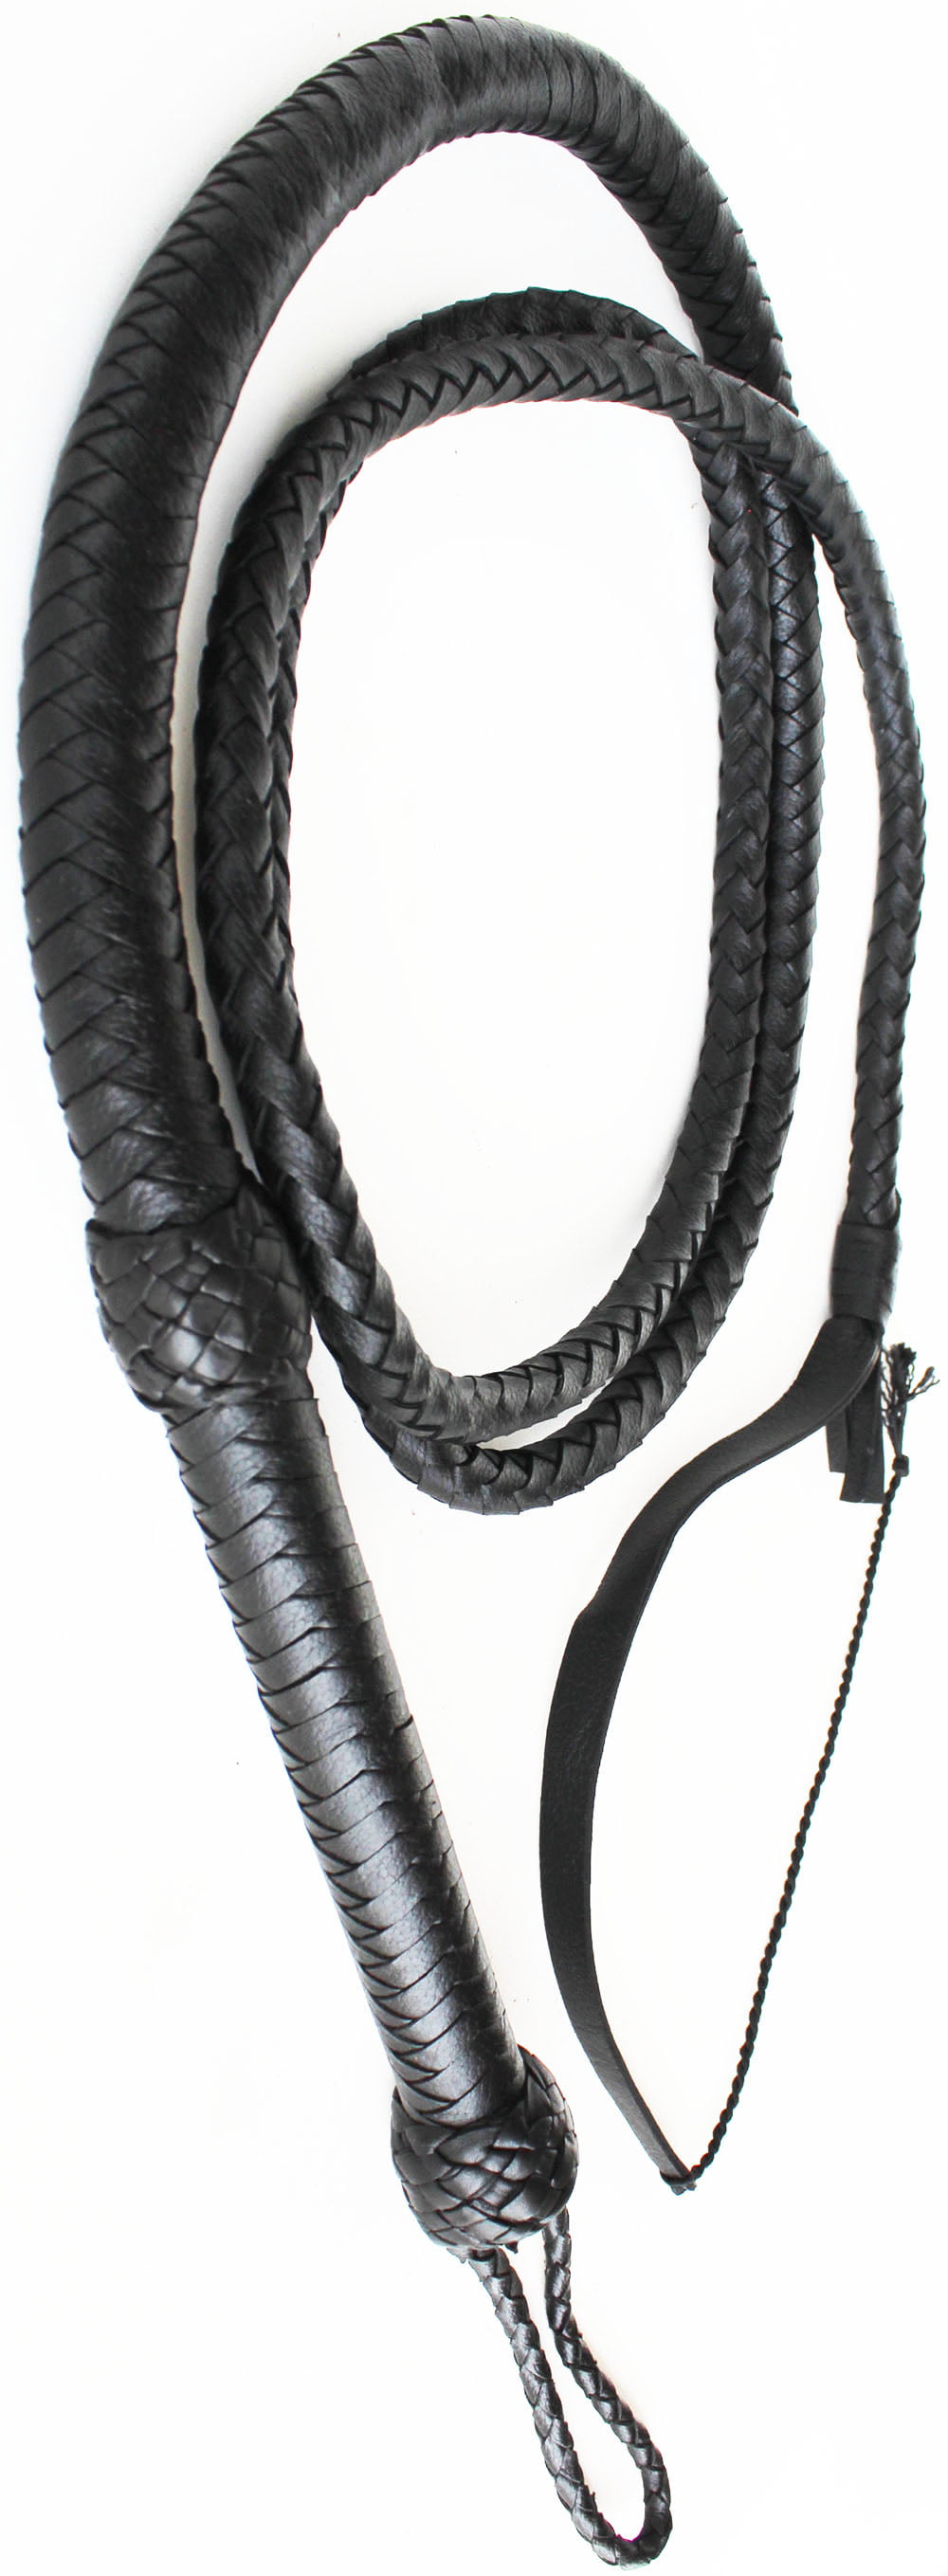 8' Hand Braided Black Leather Flexible Indiana Jones 14 Plait Bull Whip 70005 